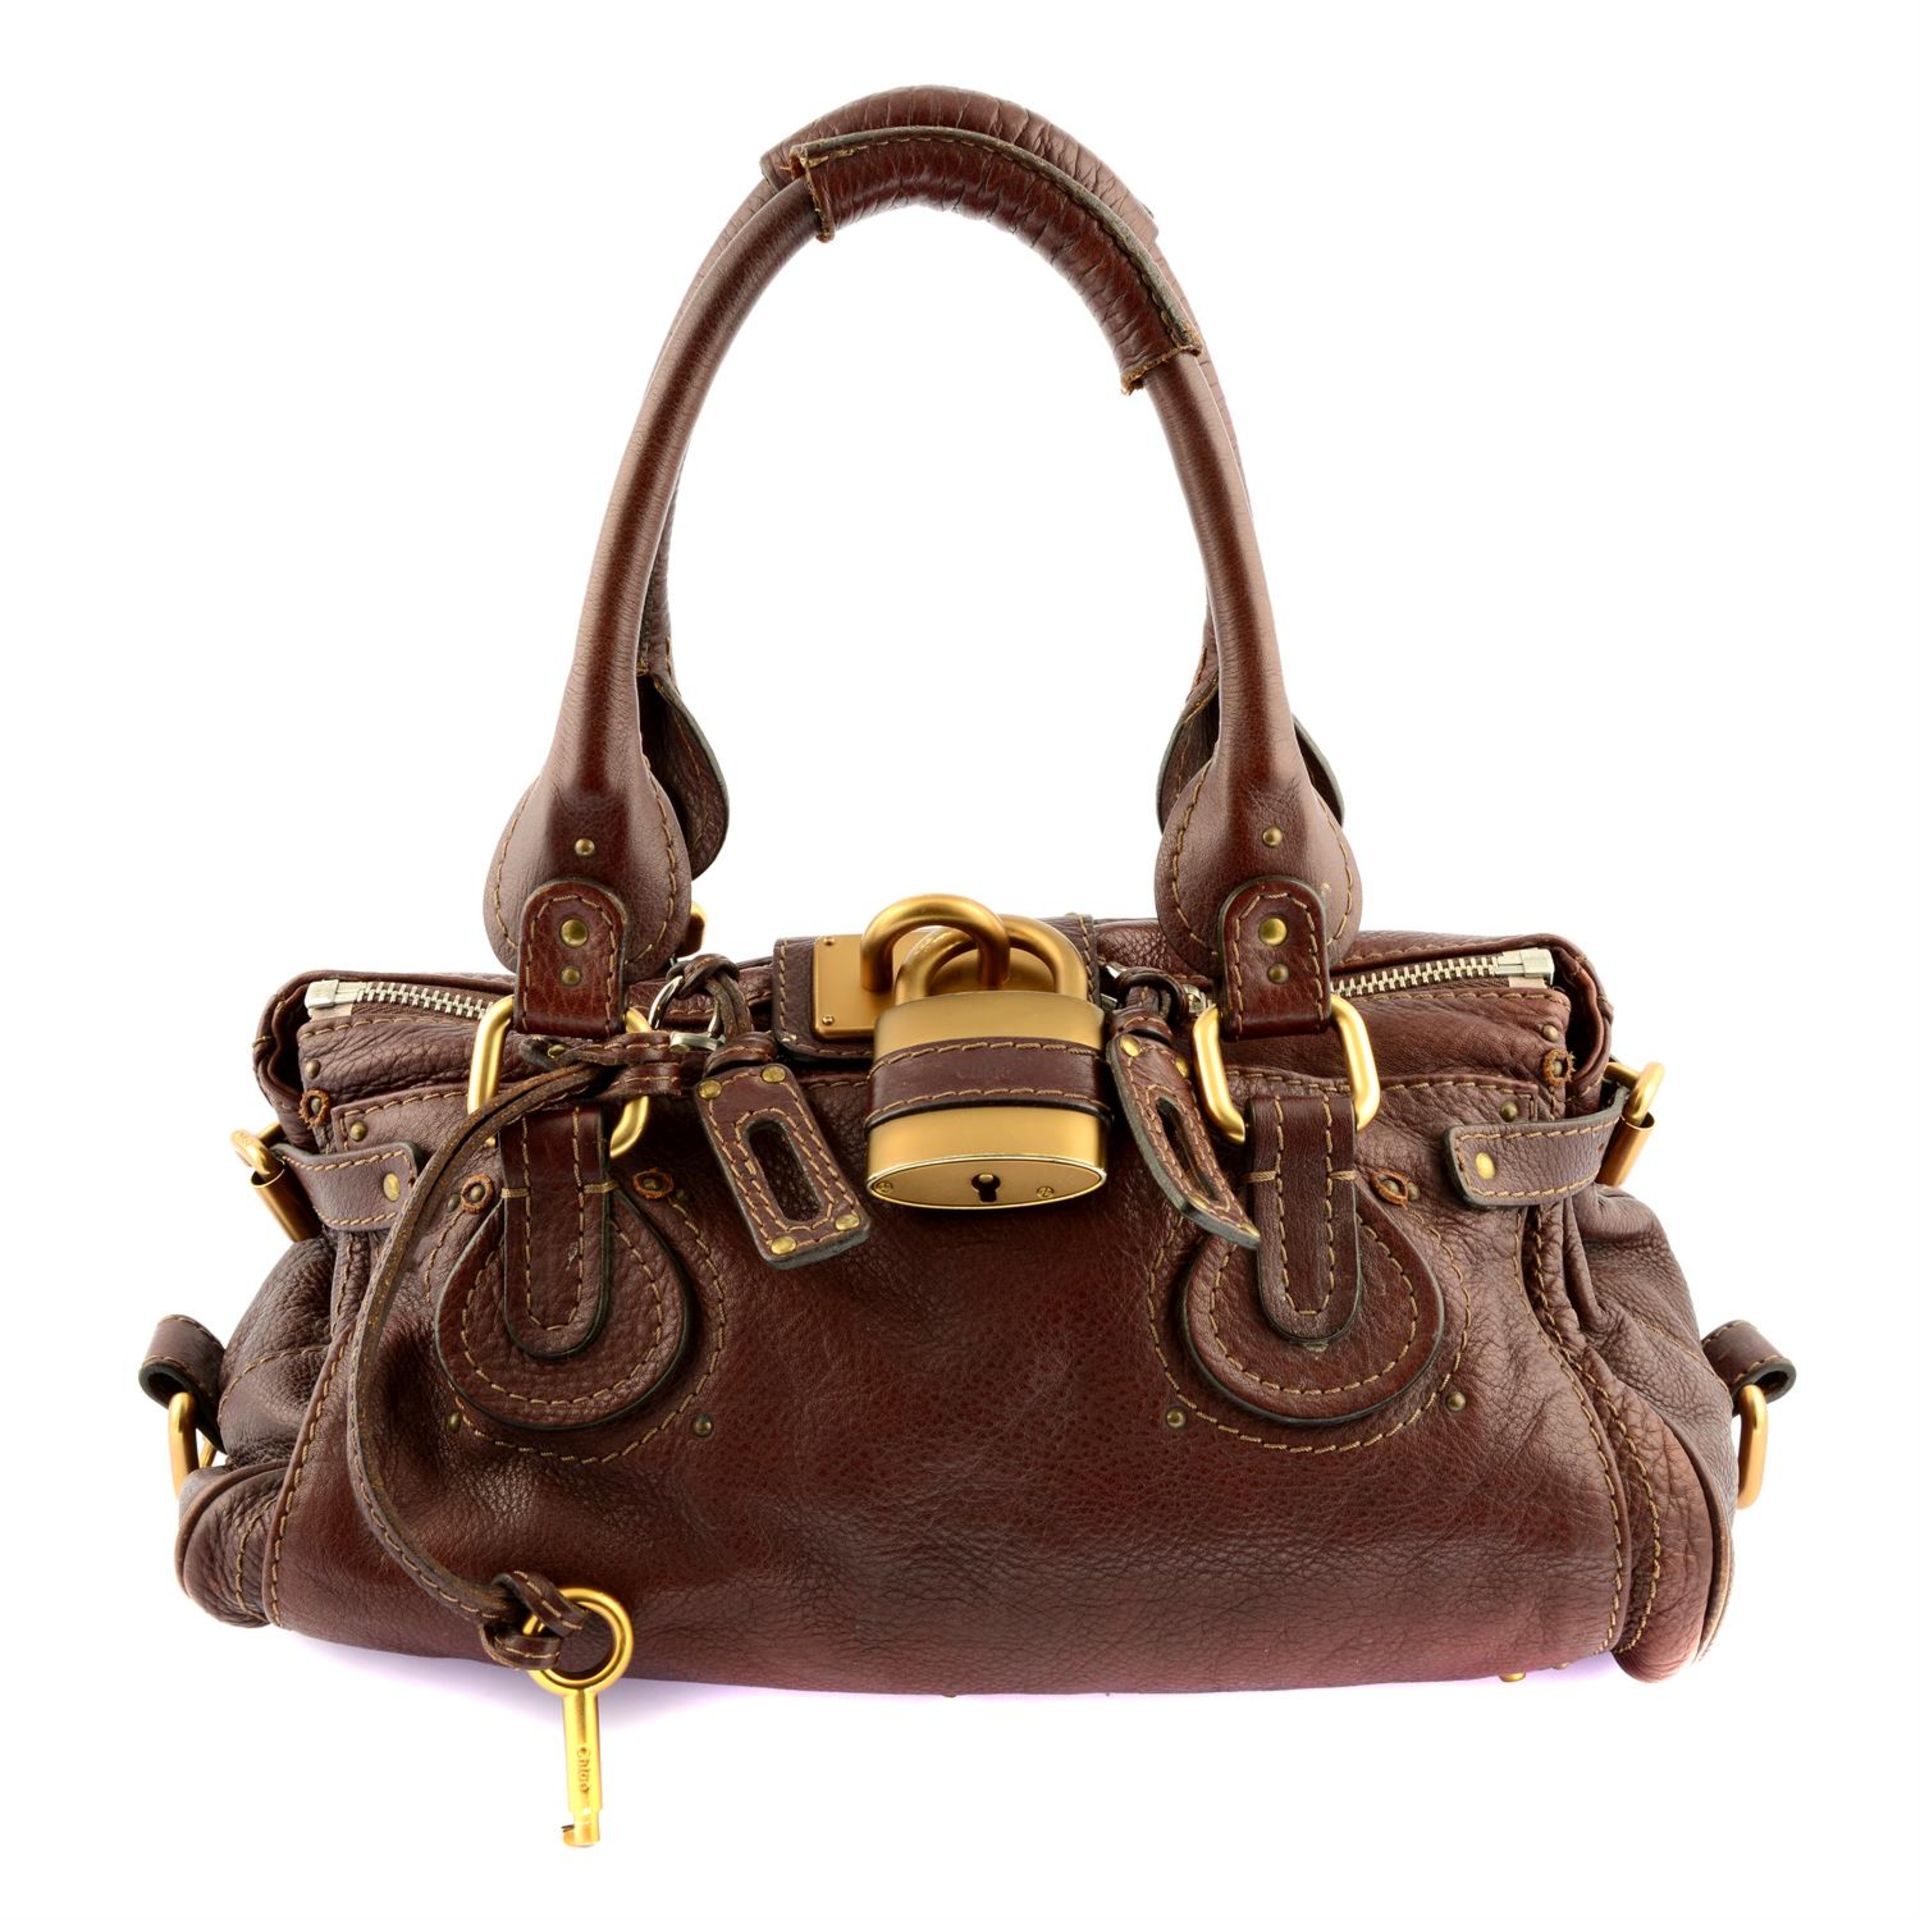 CHLOÉ - a brown leather Paddington handbag.